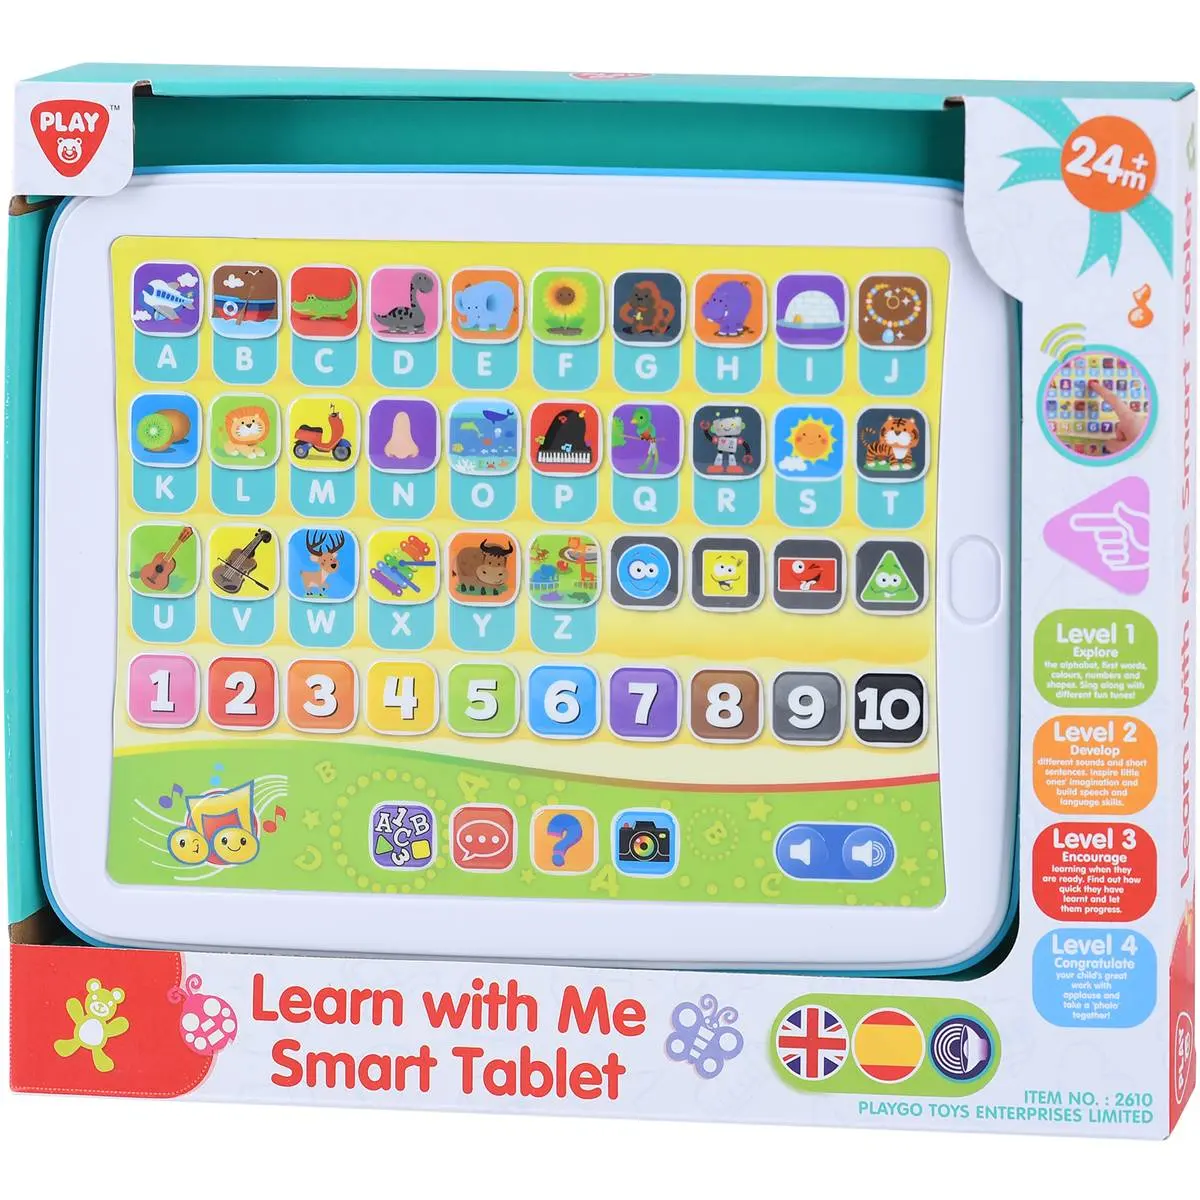 Bantalan belajar sentuh pendidikan, dengan kartu kilat layar sentuh elektronik pembelajaran mainan pendidikan prasekolah interaktif